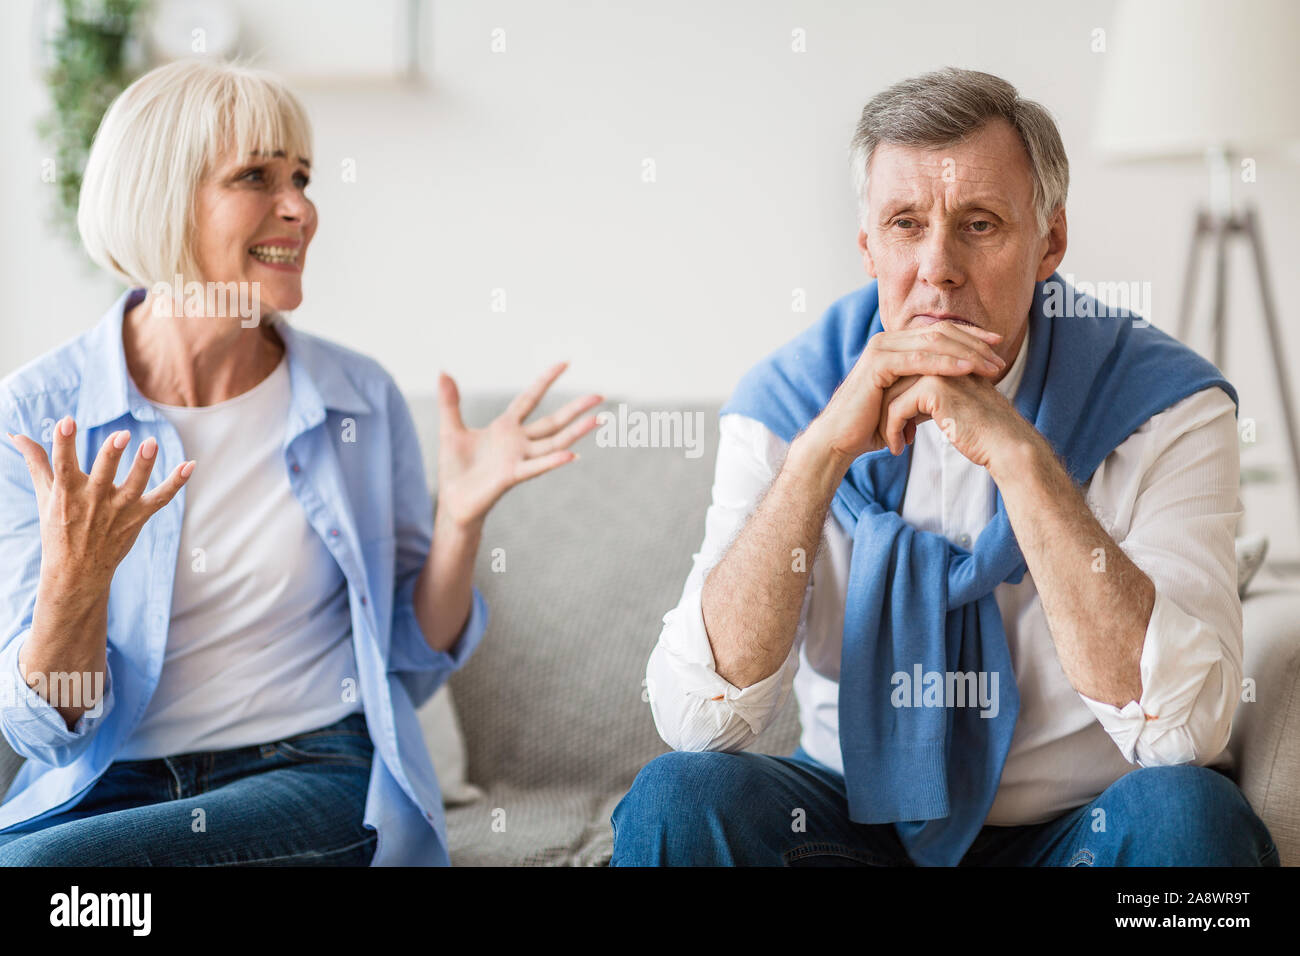 Abusive relationship. Angry woman shouting at husband Stock Photo